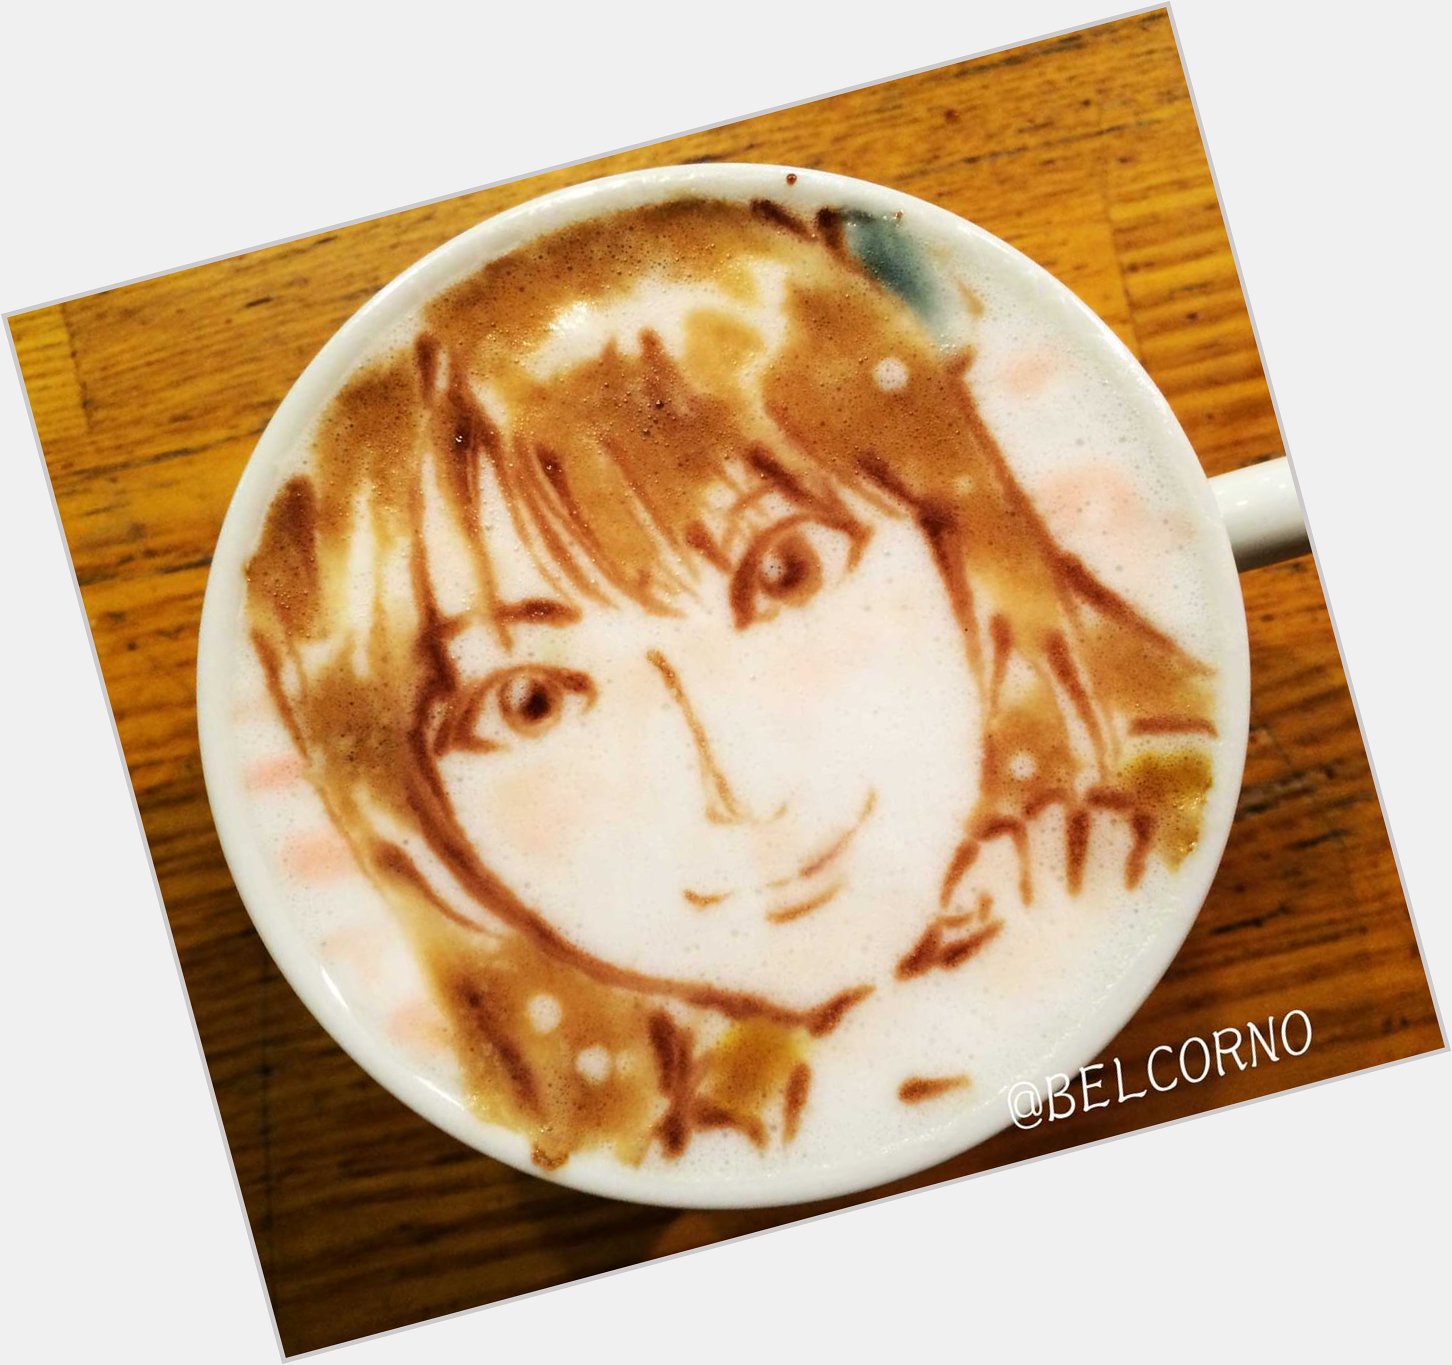              LatteArt Yui Horie           Happy Birthday!  